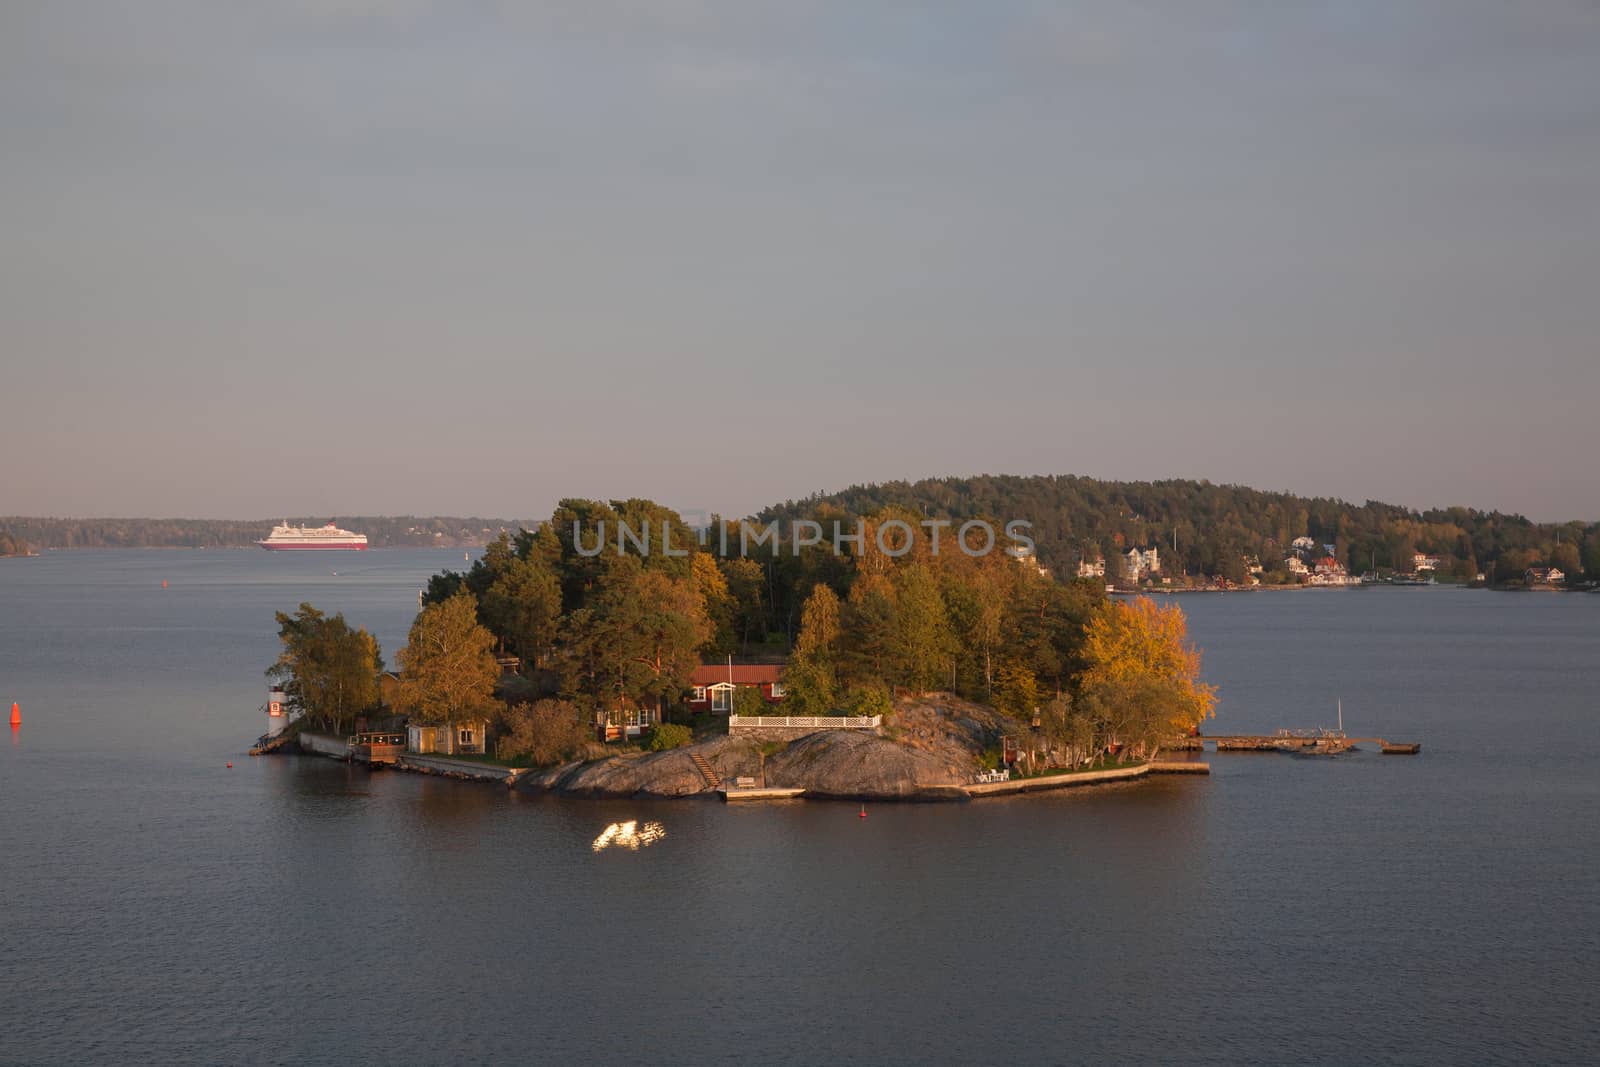 ferry in Sweden islands by desant7474